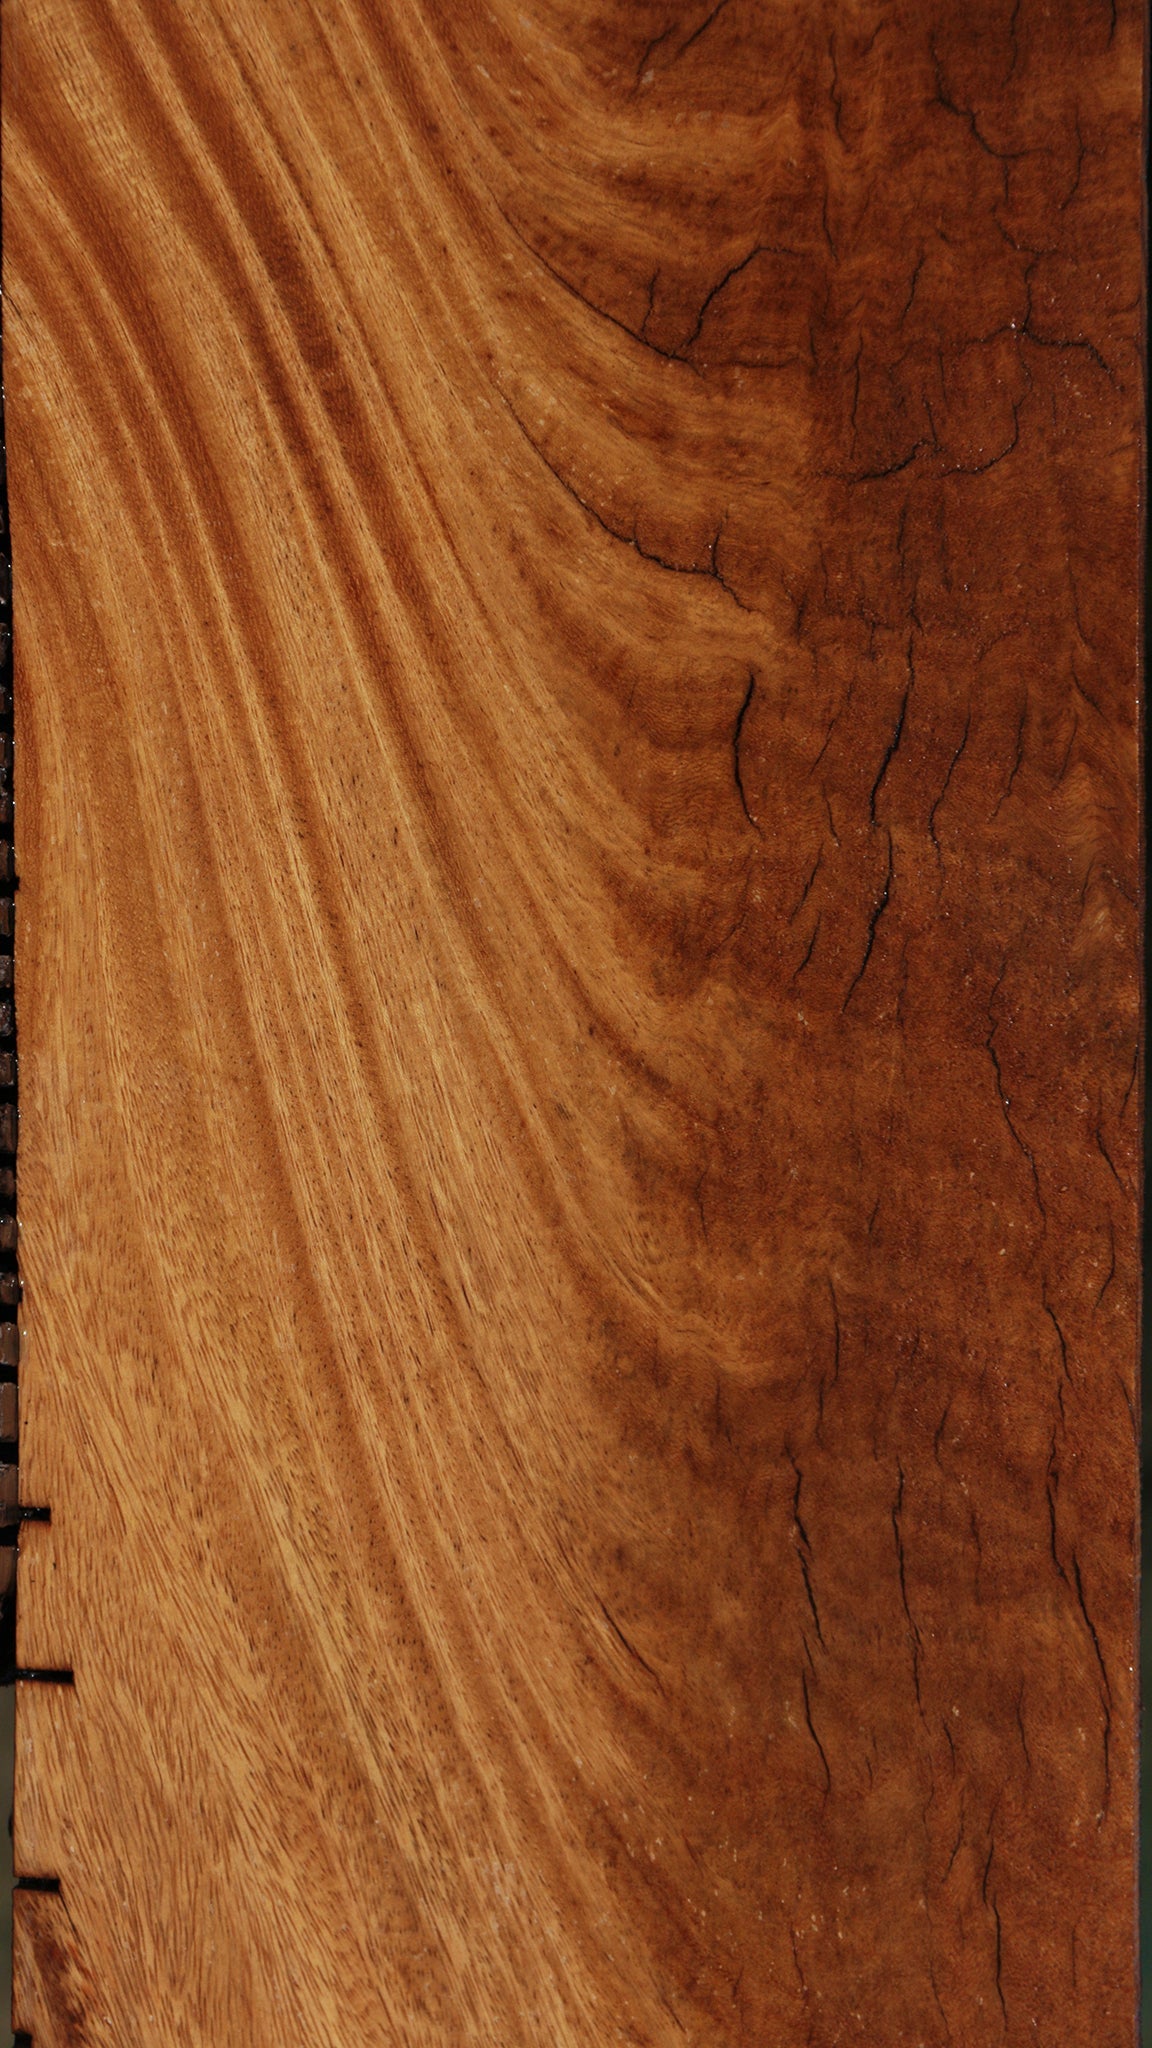 Figured Crotchwood Cerejeira Lumber